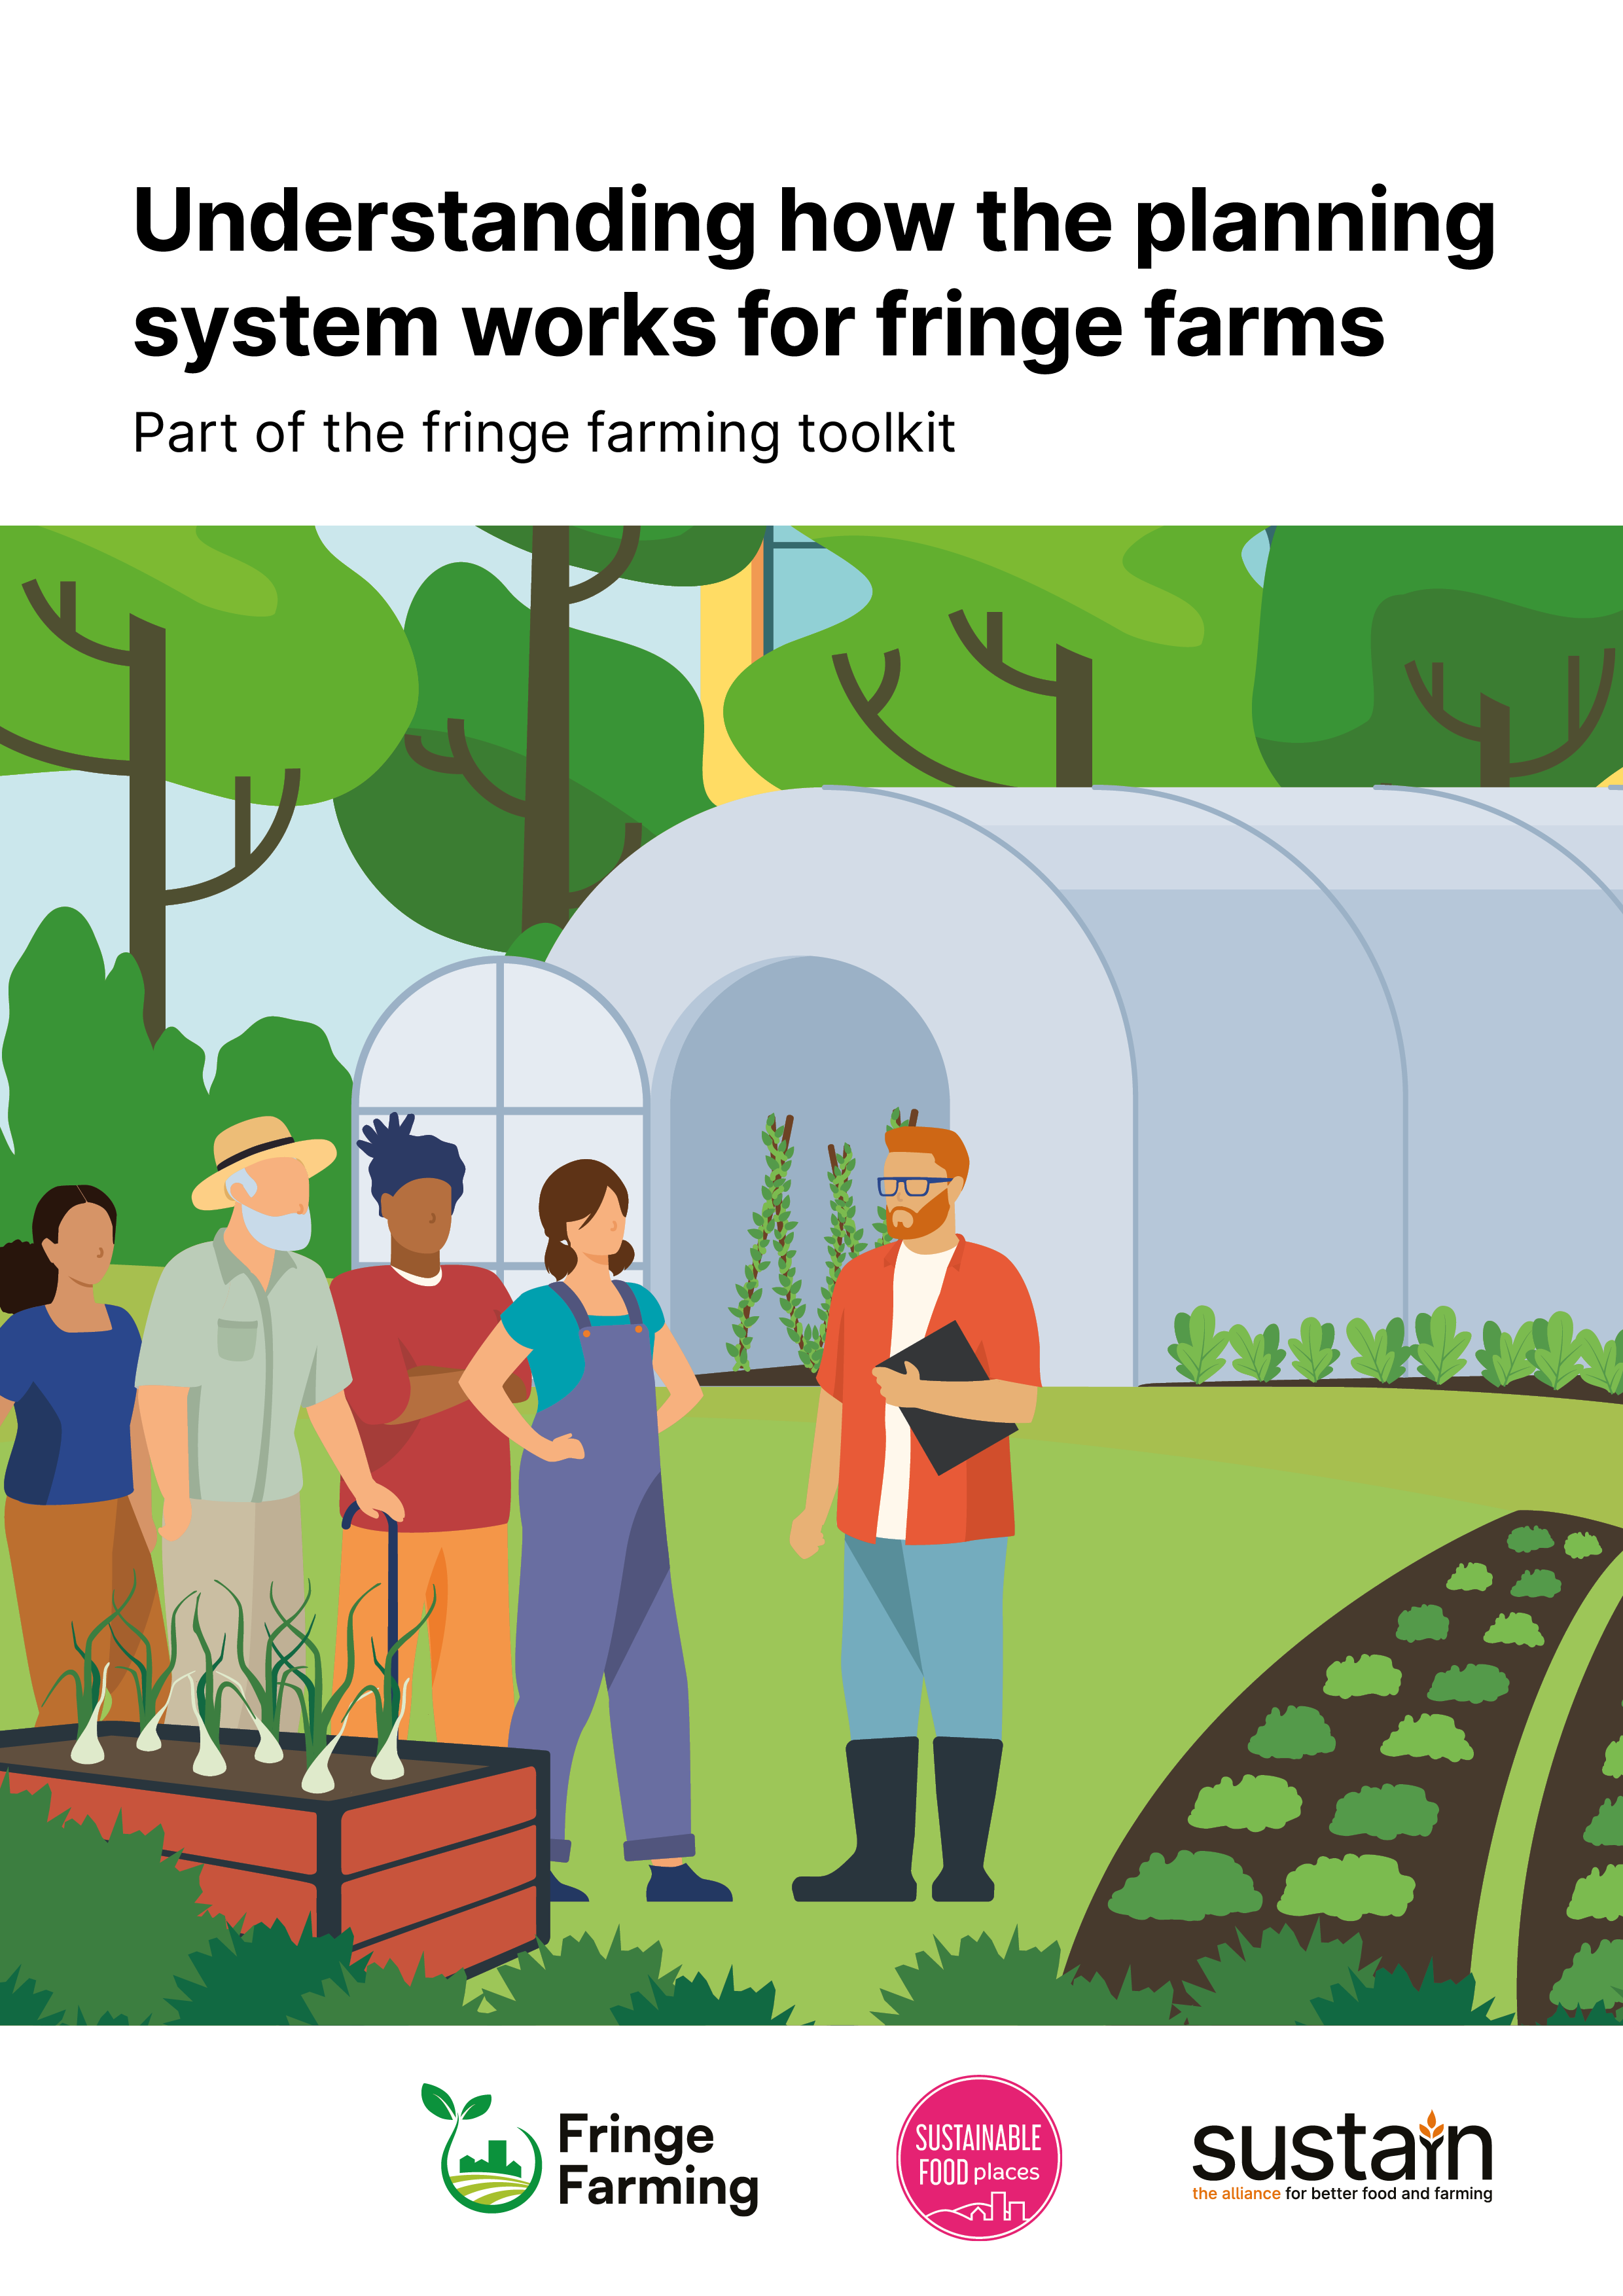 The fringe farming toolkit 3. Credit: Sustain